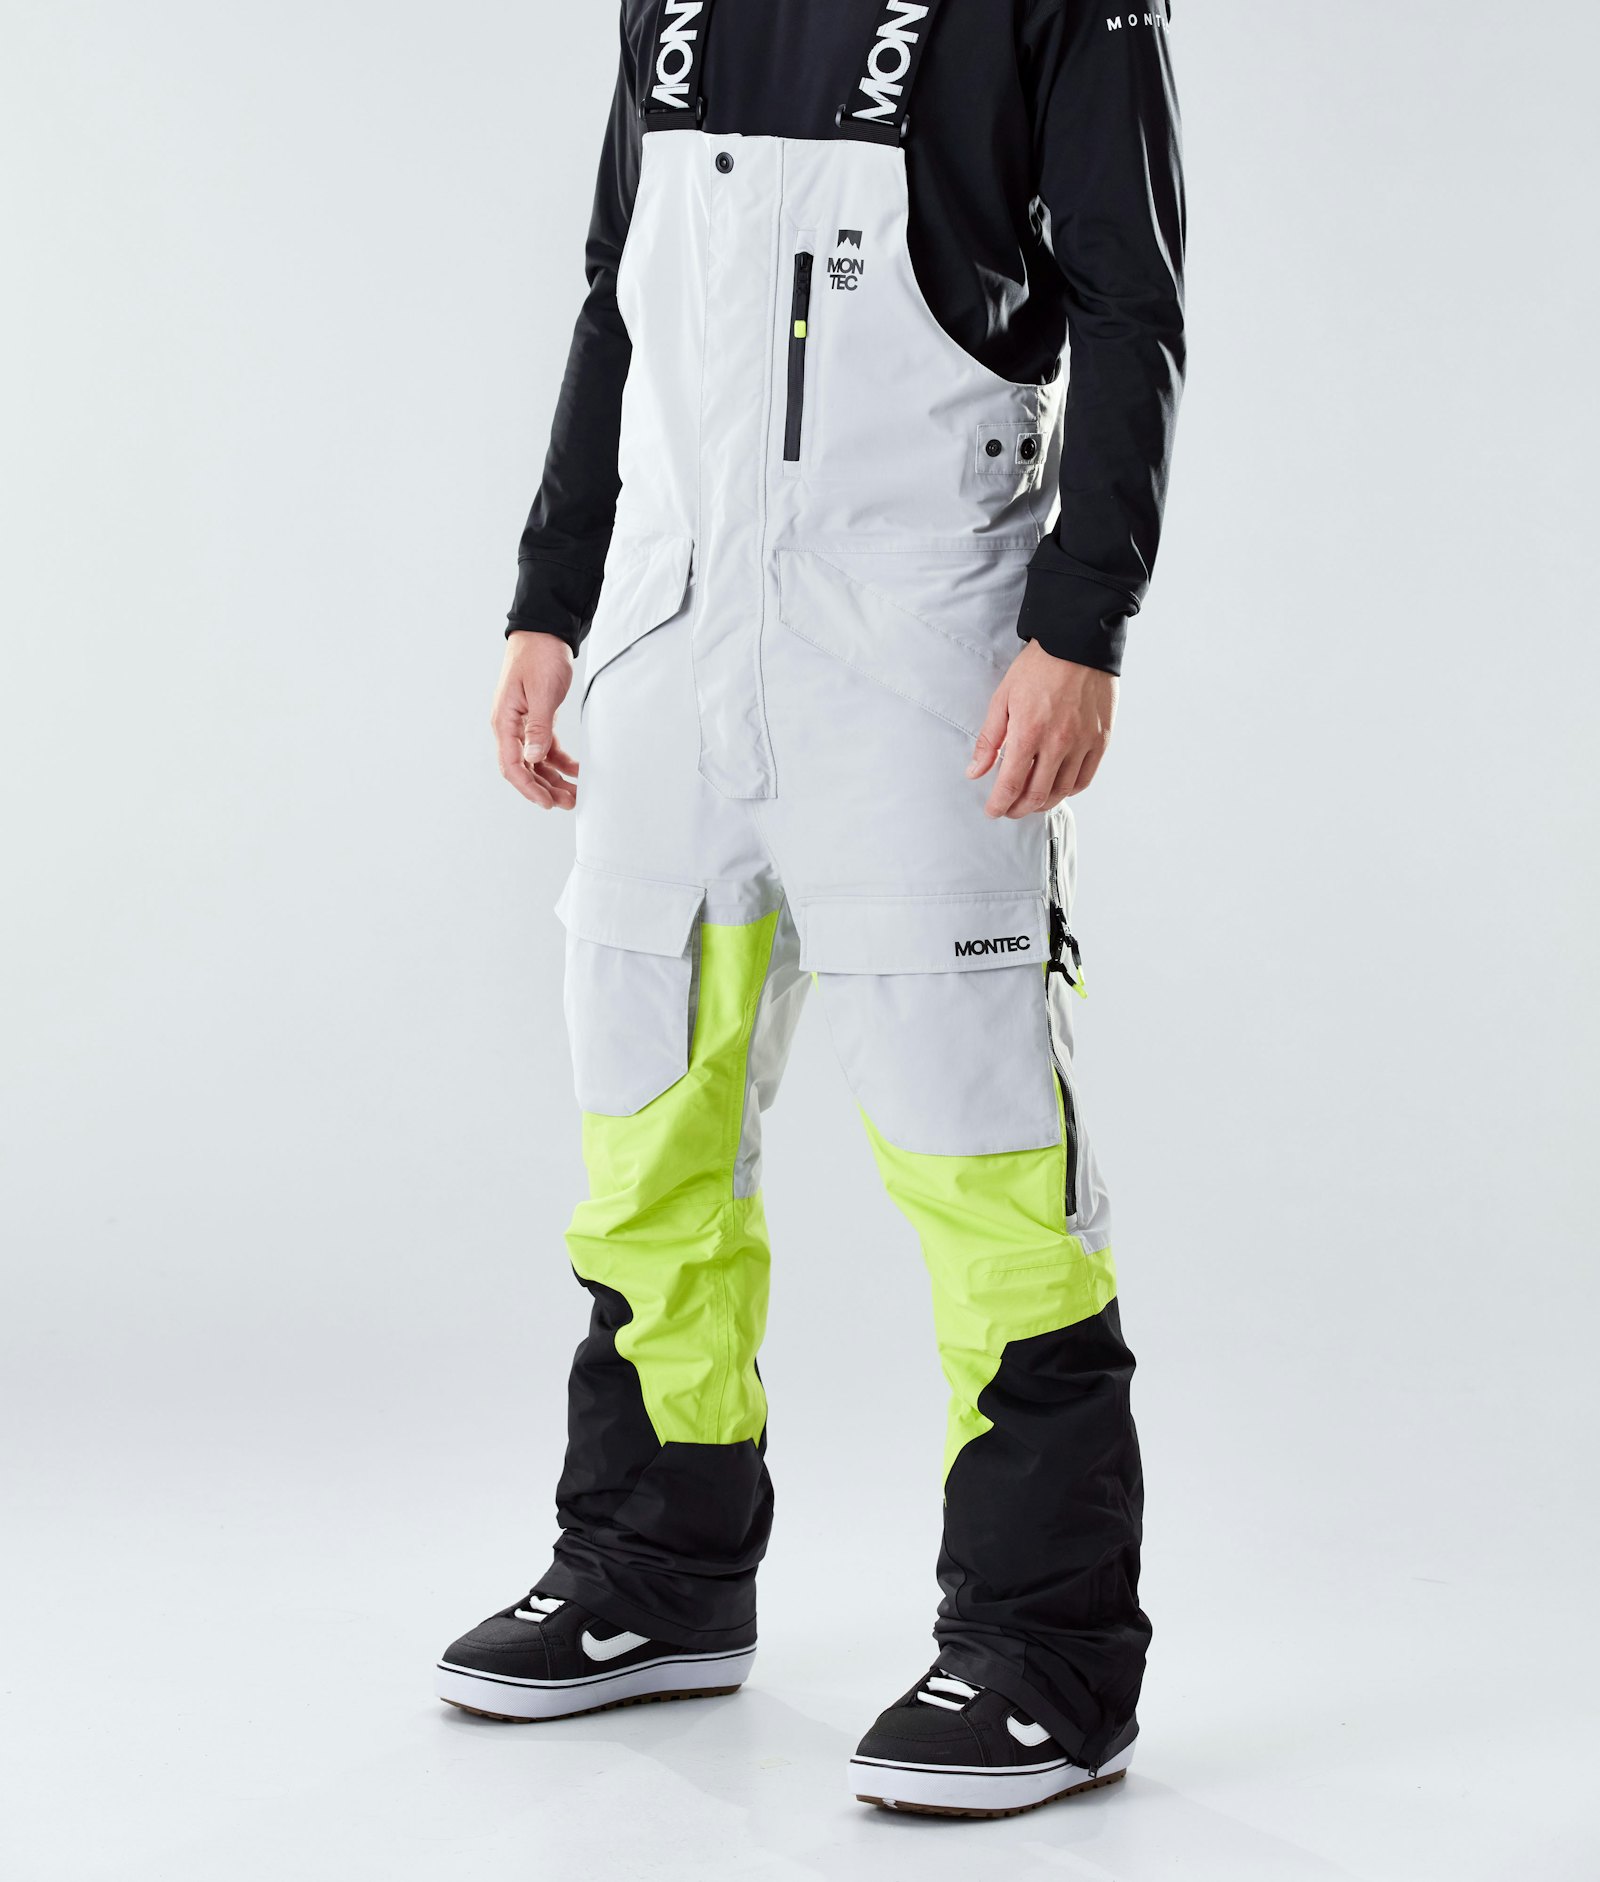 Fawk 2020 Snowboard Pants Men Light Grey/Neon Yellow/Black